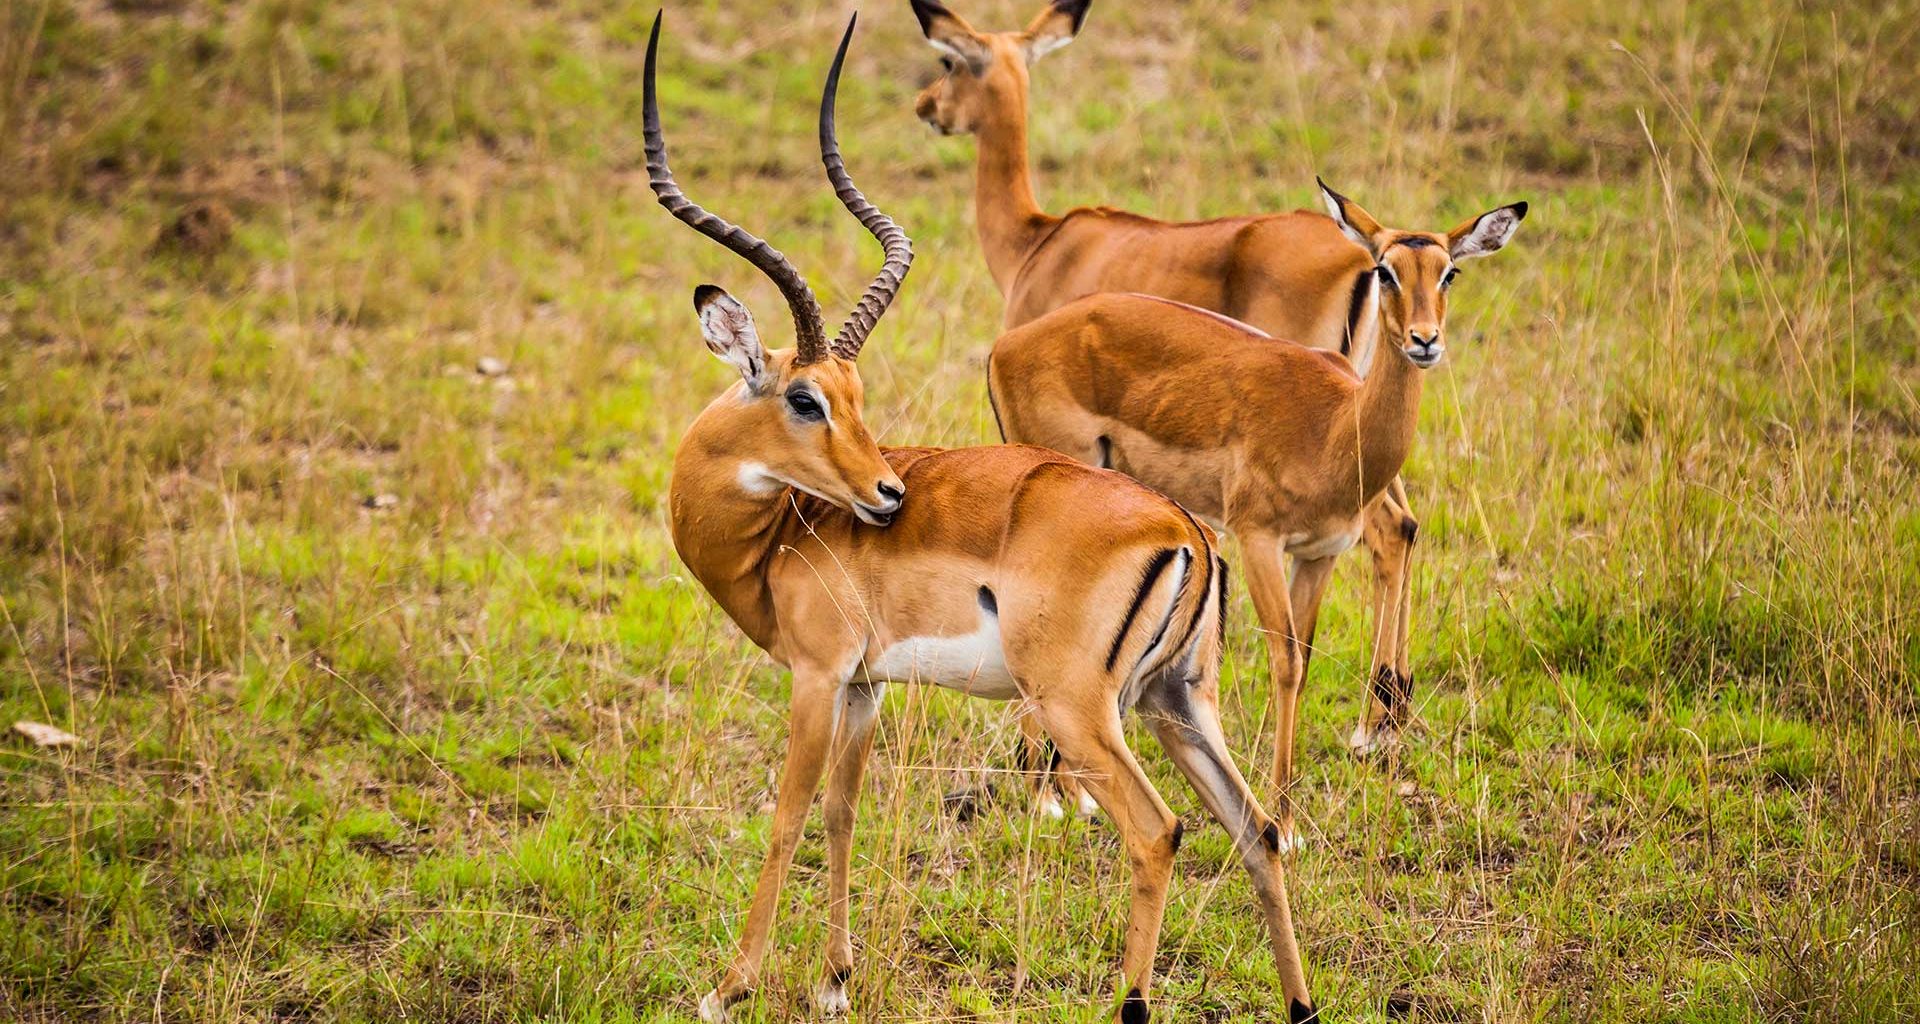 Thomson's gazelle in the Nairobi National Park | Image: antonpetrus